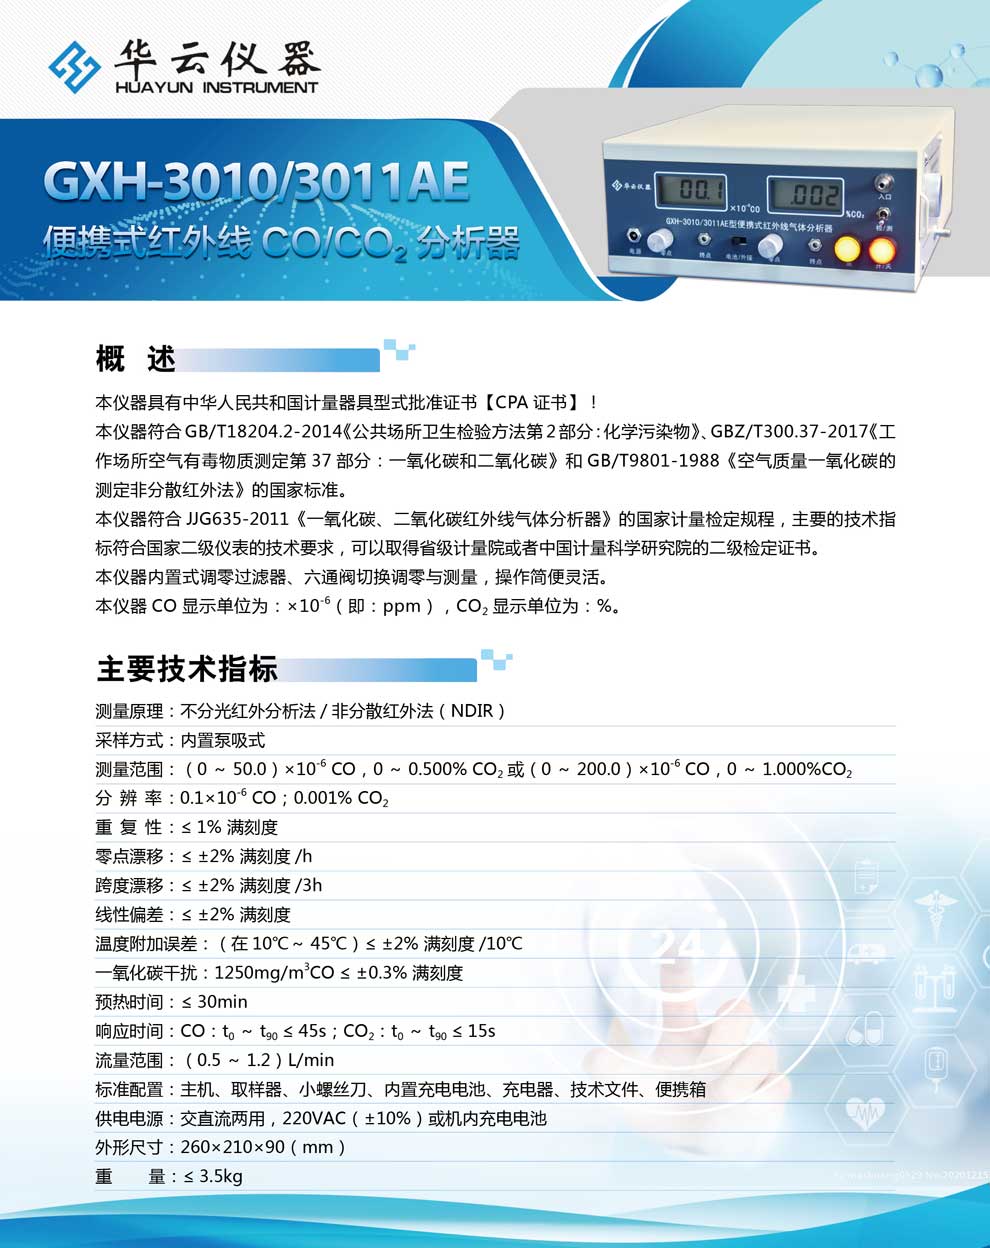 GXH-3010、3011AE系列-彩页.jpg